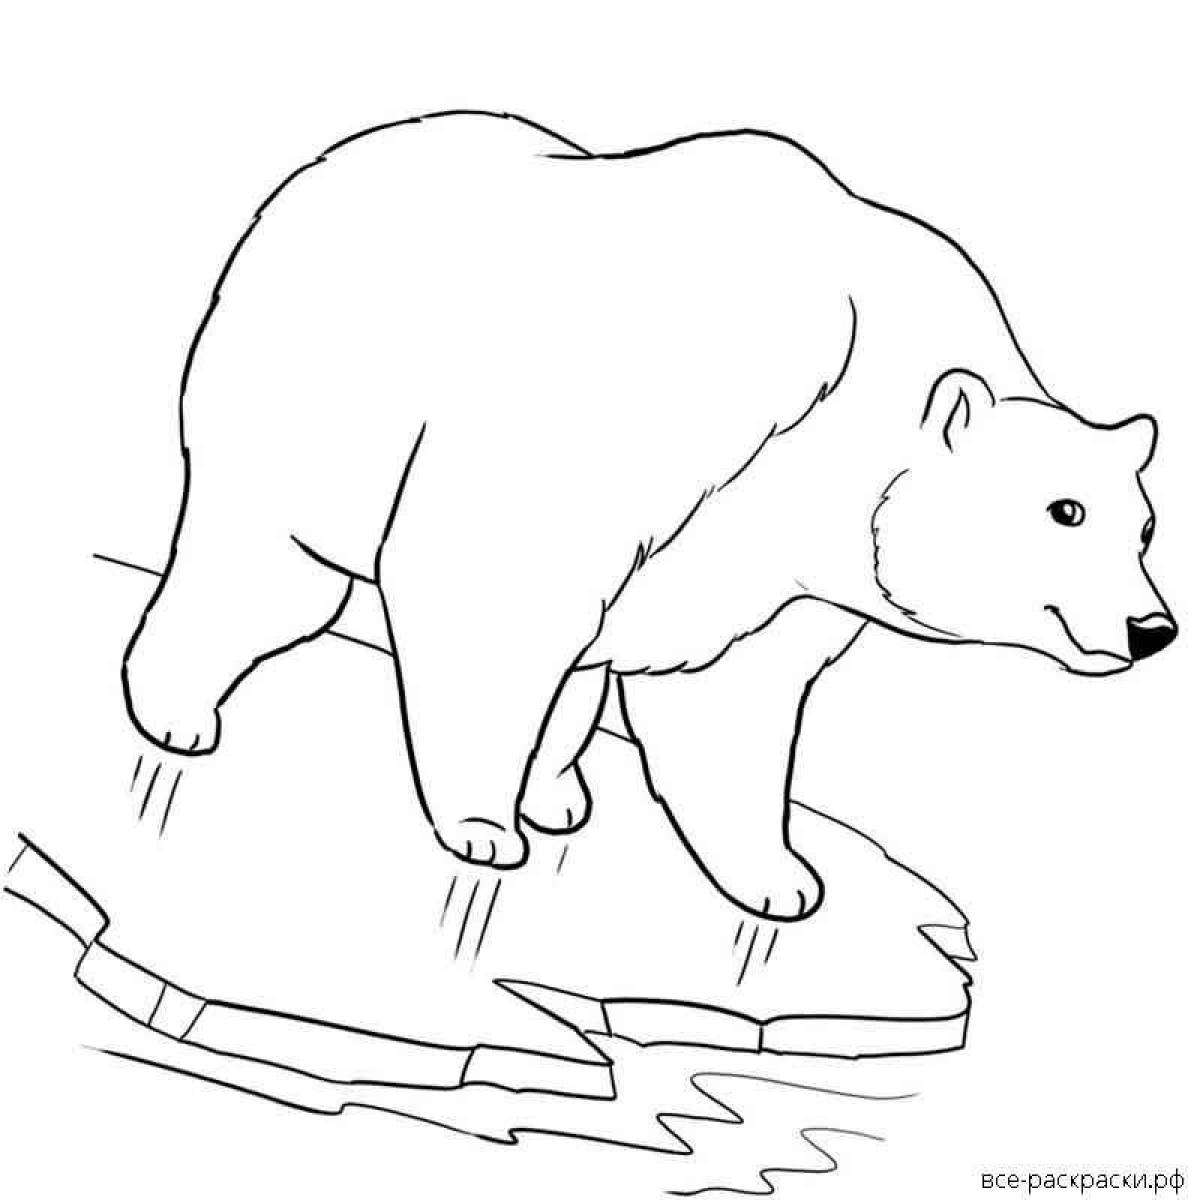 Glamorous polar bear on ice coloring page